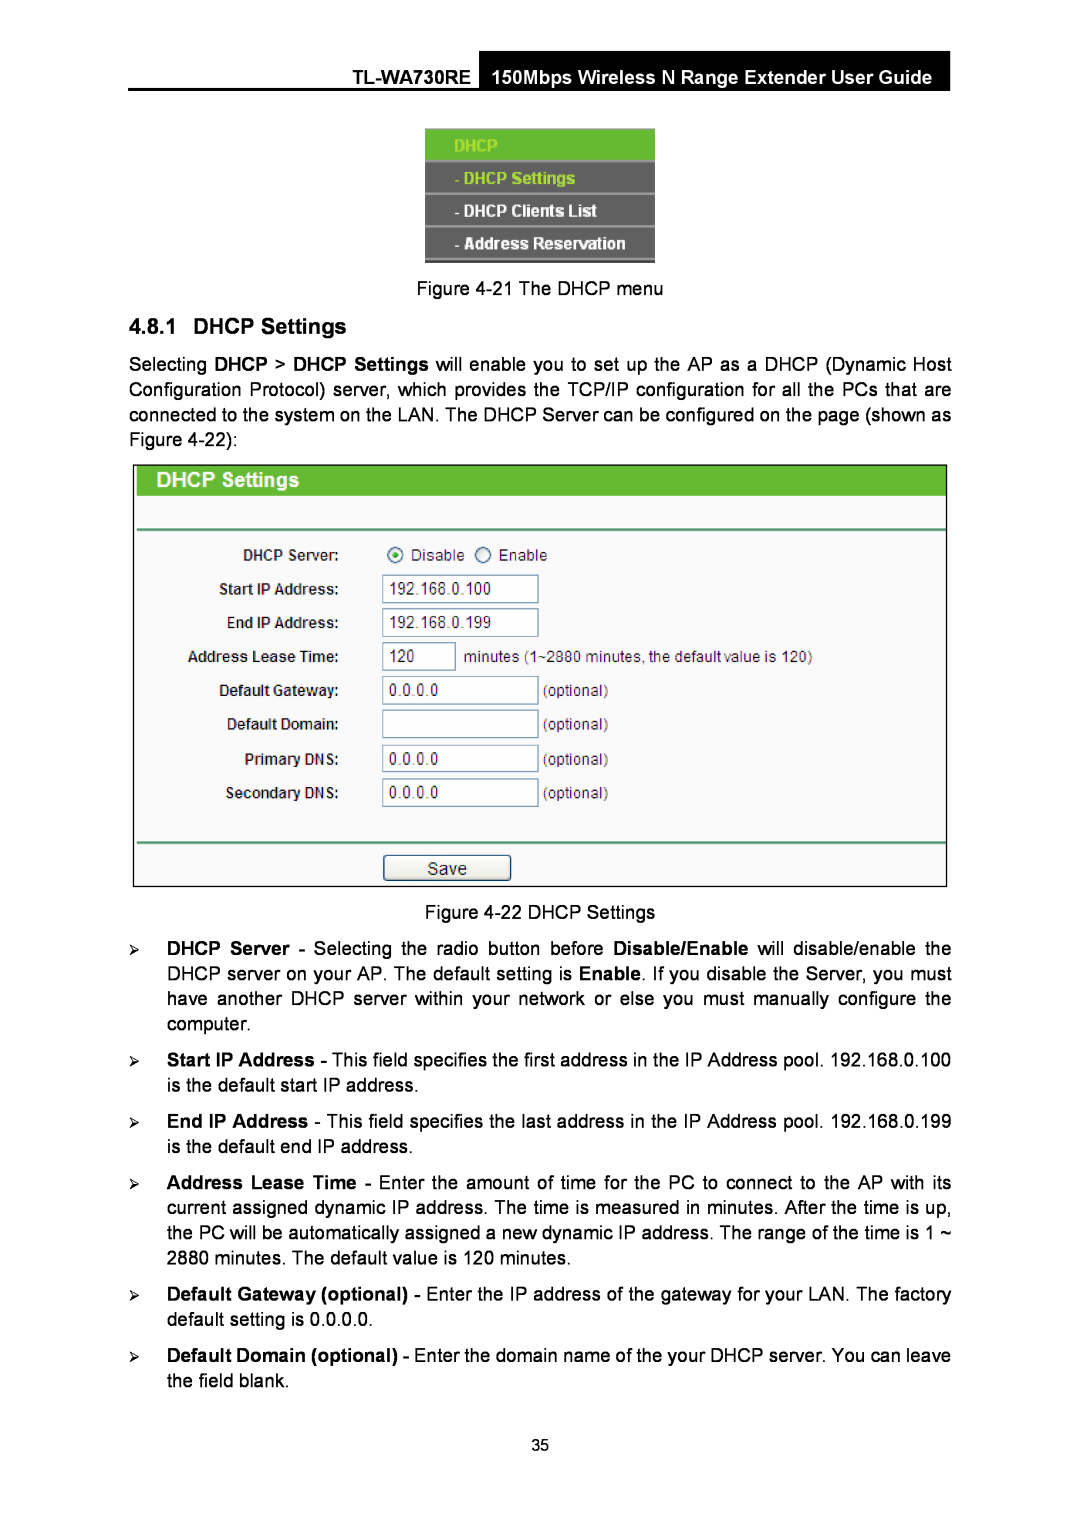 TP-Link manual DHCP Settings, TL-WA730RE 150Mbps Wireless N Range Extender User Guide 